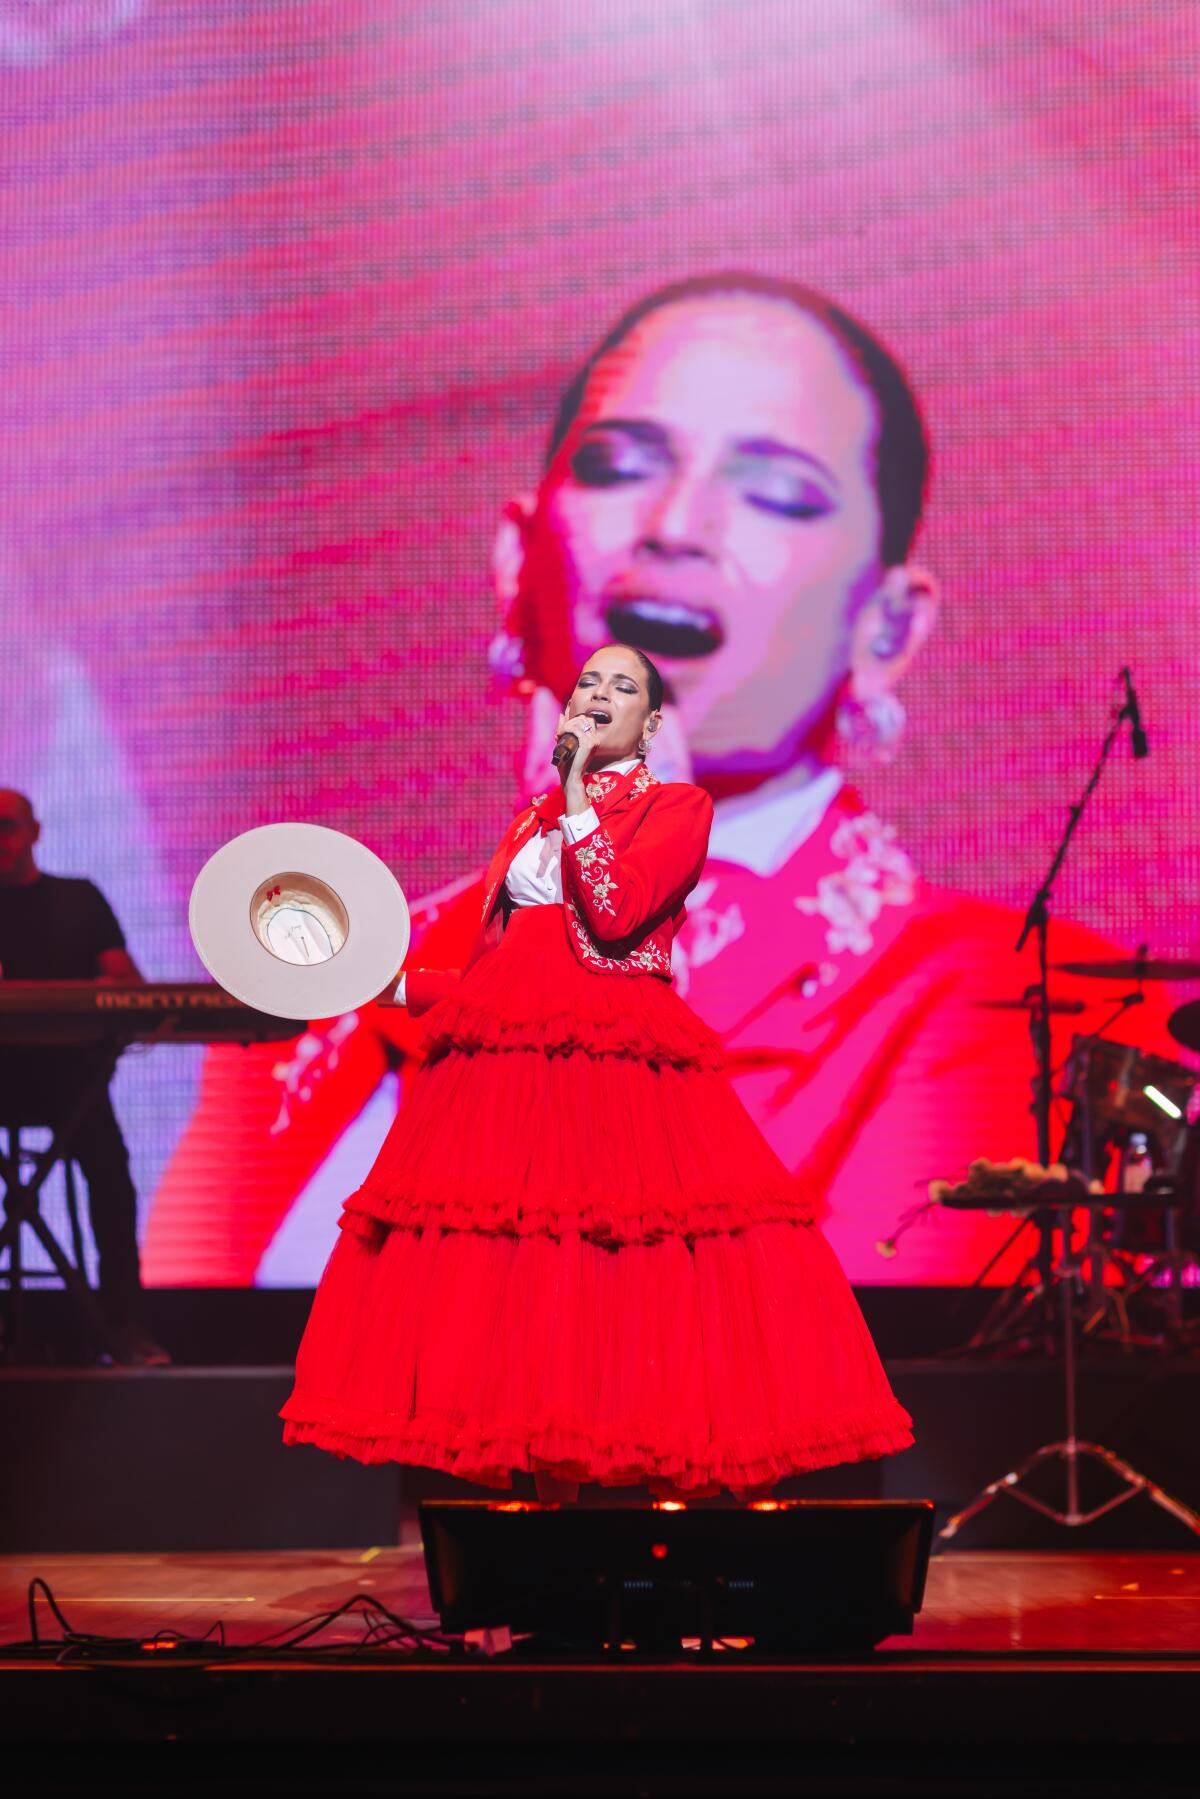 "La espa?ola más mexicana" Natalia Jiménez ofreció un magistral espectáculo 